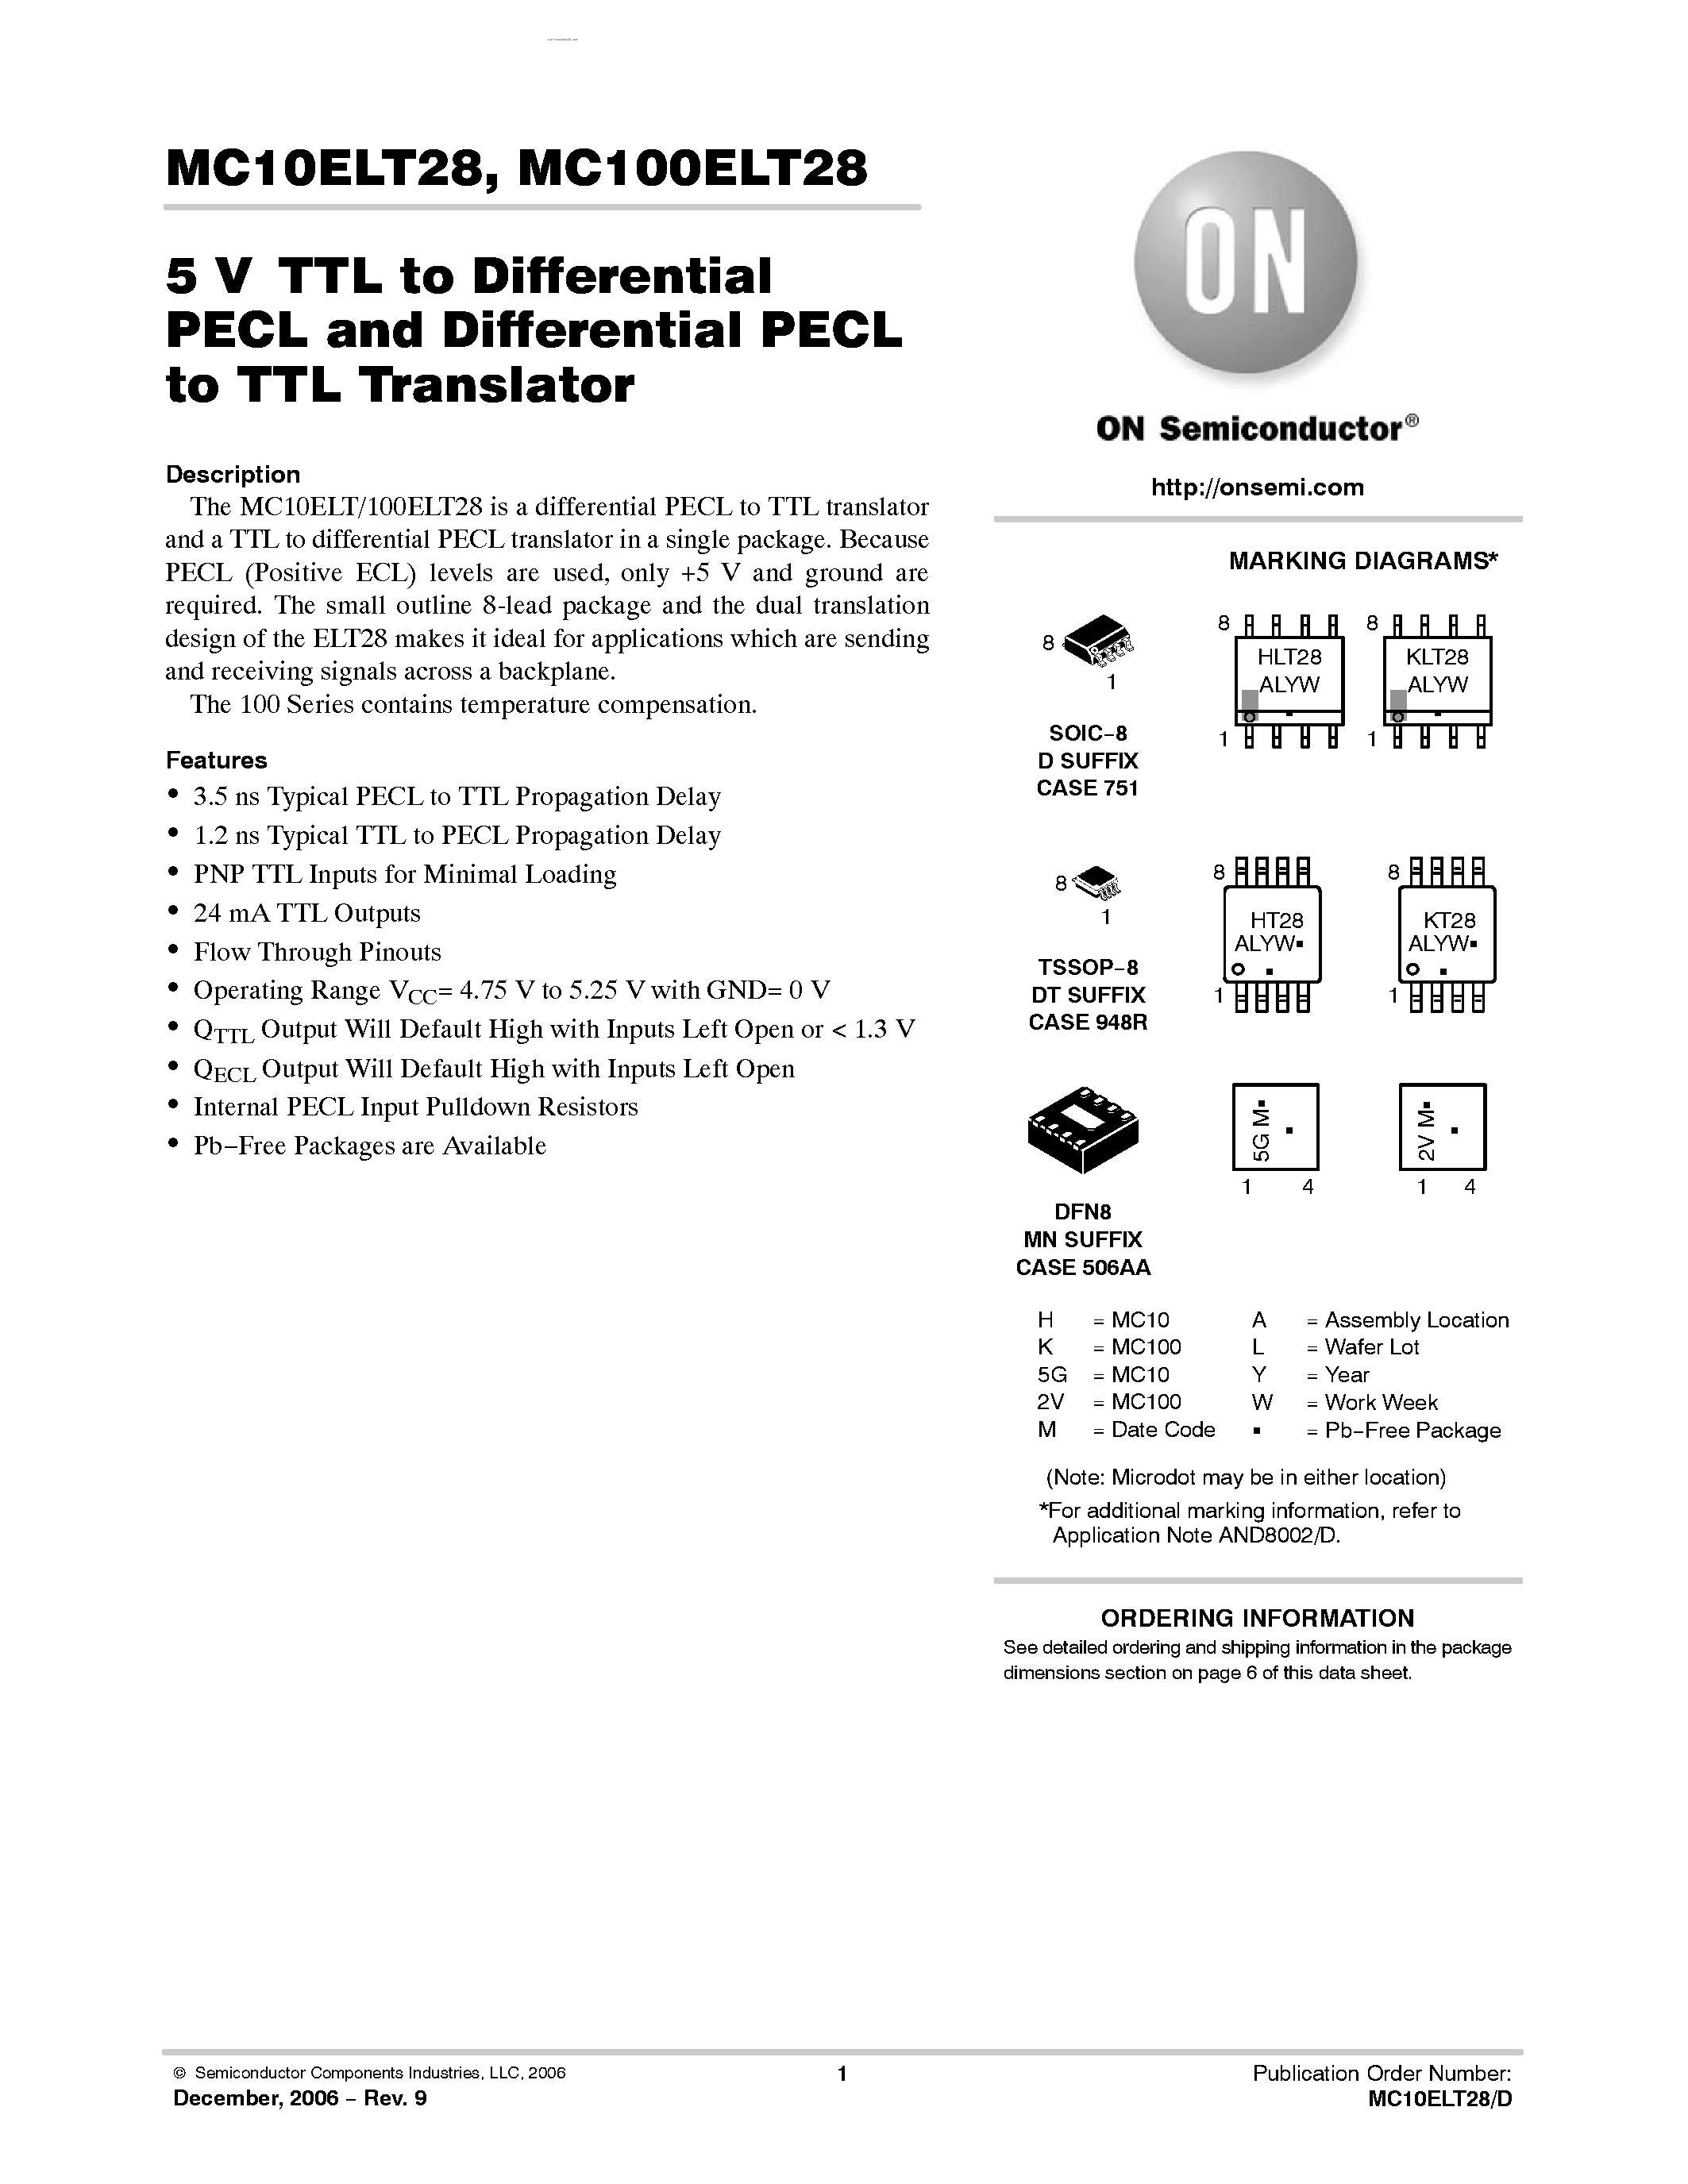 Даташит MC100ELT28-TTL to Differential PECL/Differential PECL to TTL Translator страница 1